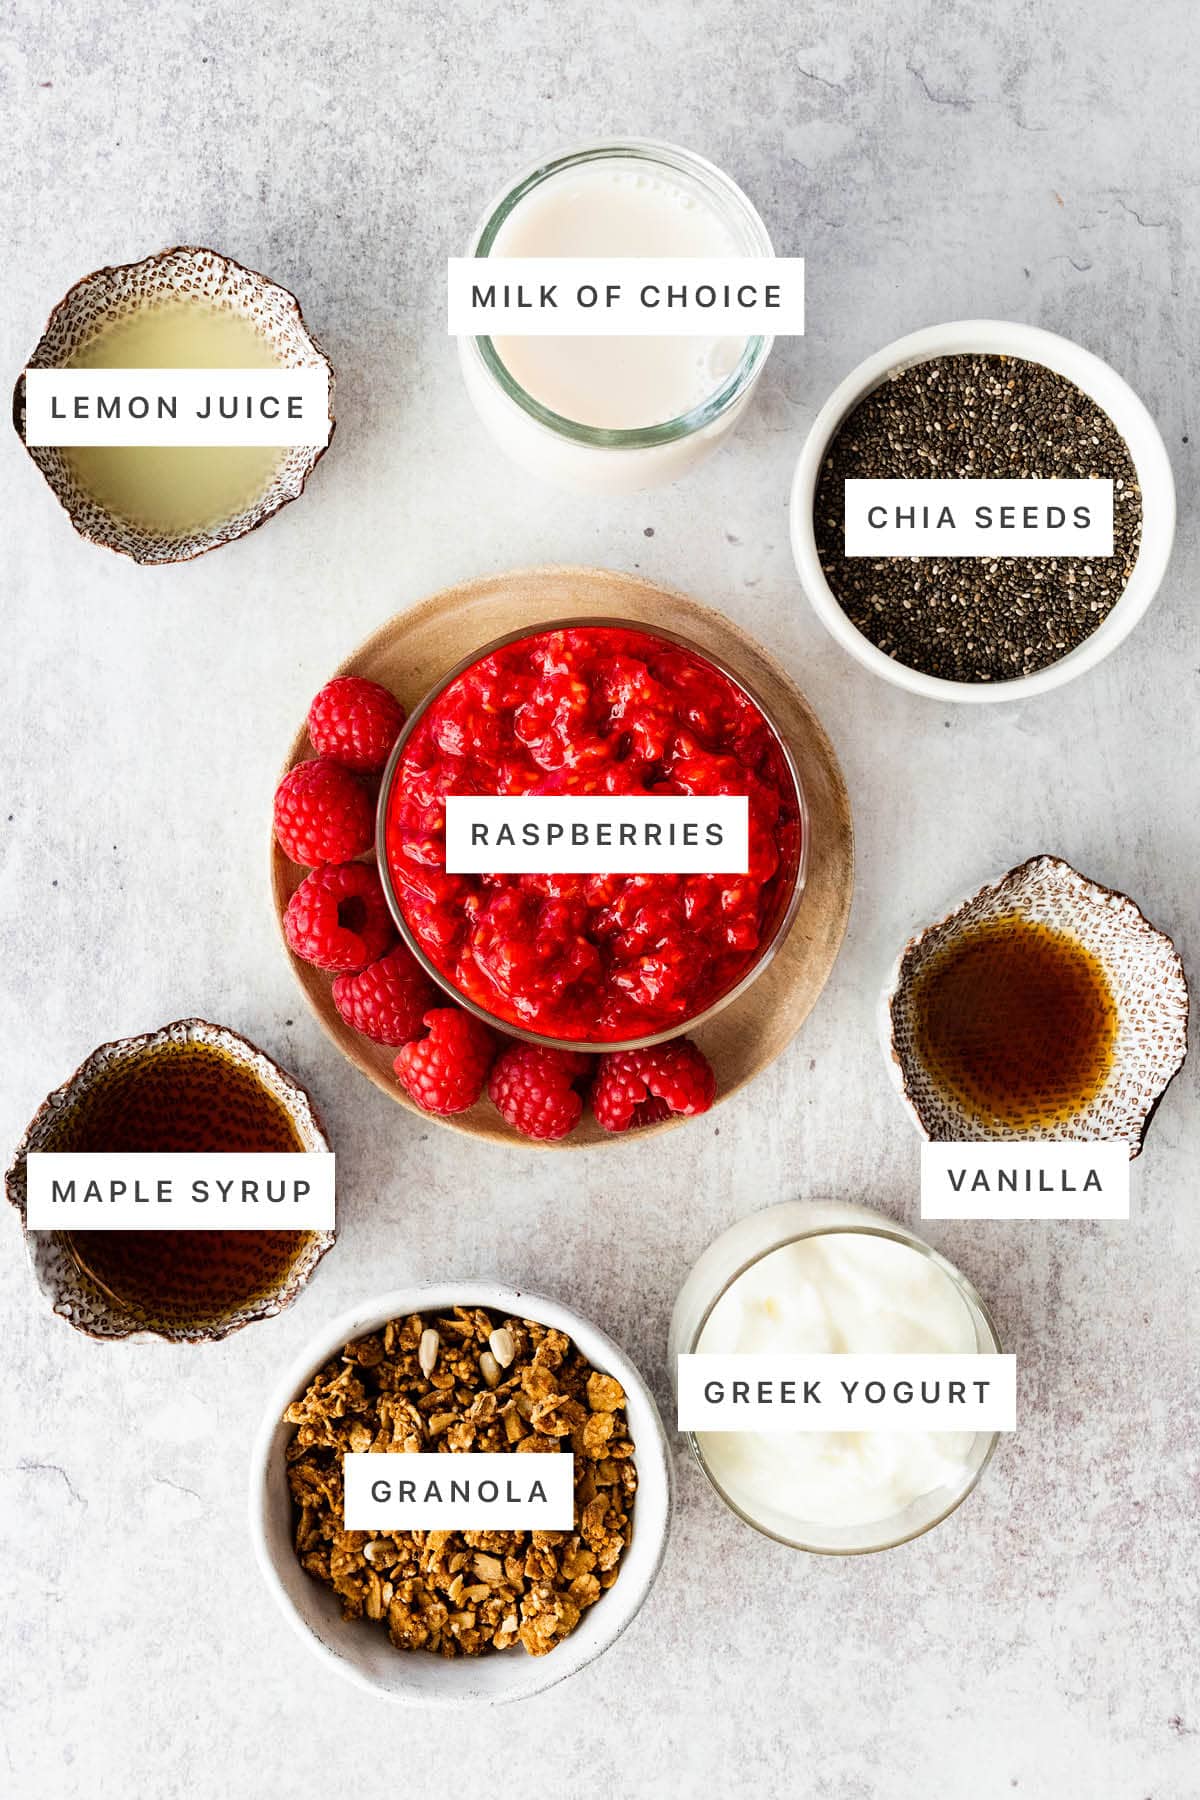 Ingredients measured out to make Raspberry Chia Pudding: lemon juice, milk, chia seeds, raspberries, vanilla, maple syrup, granola and Greek yogurt.